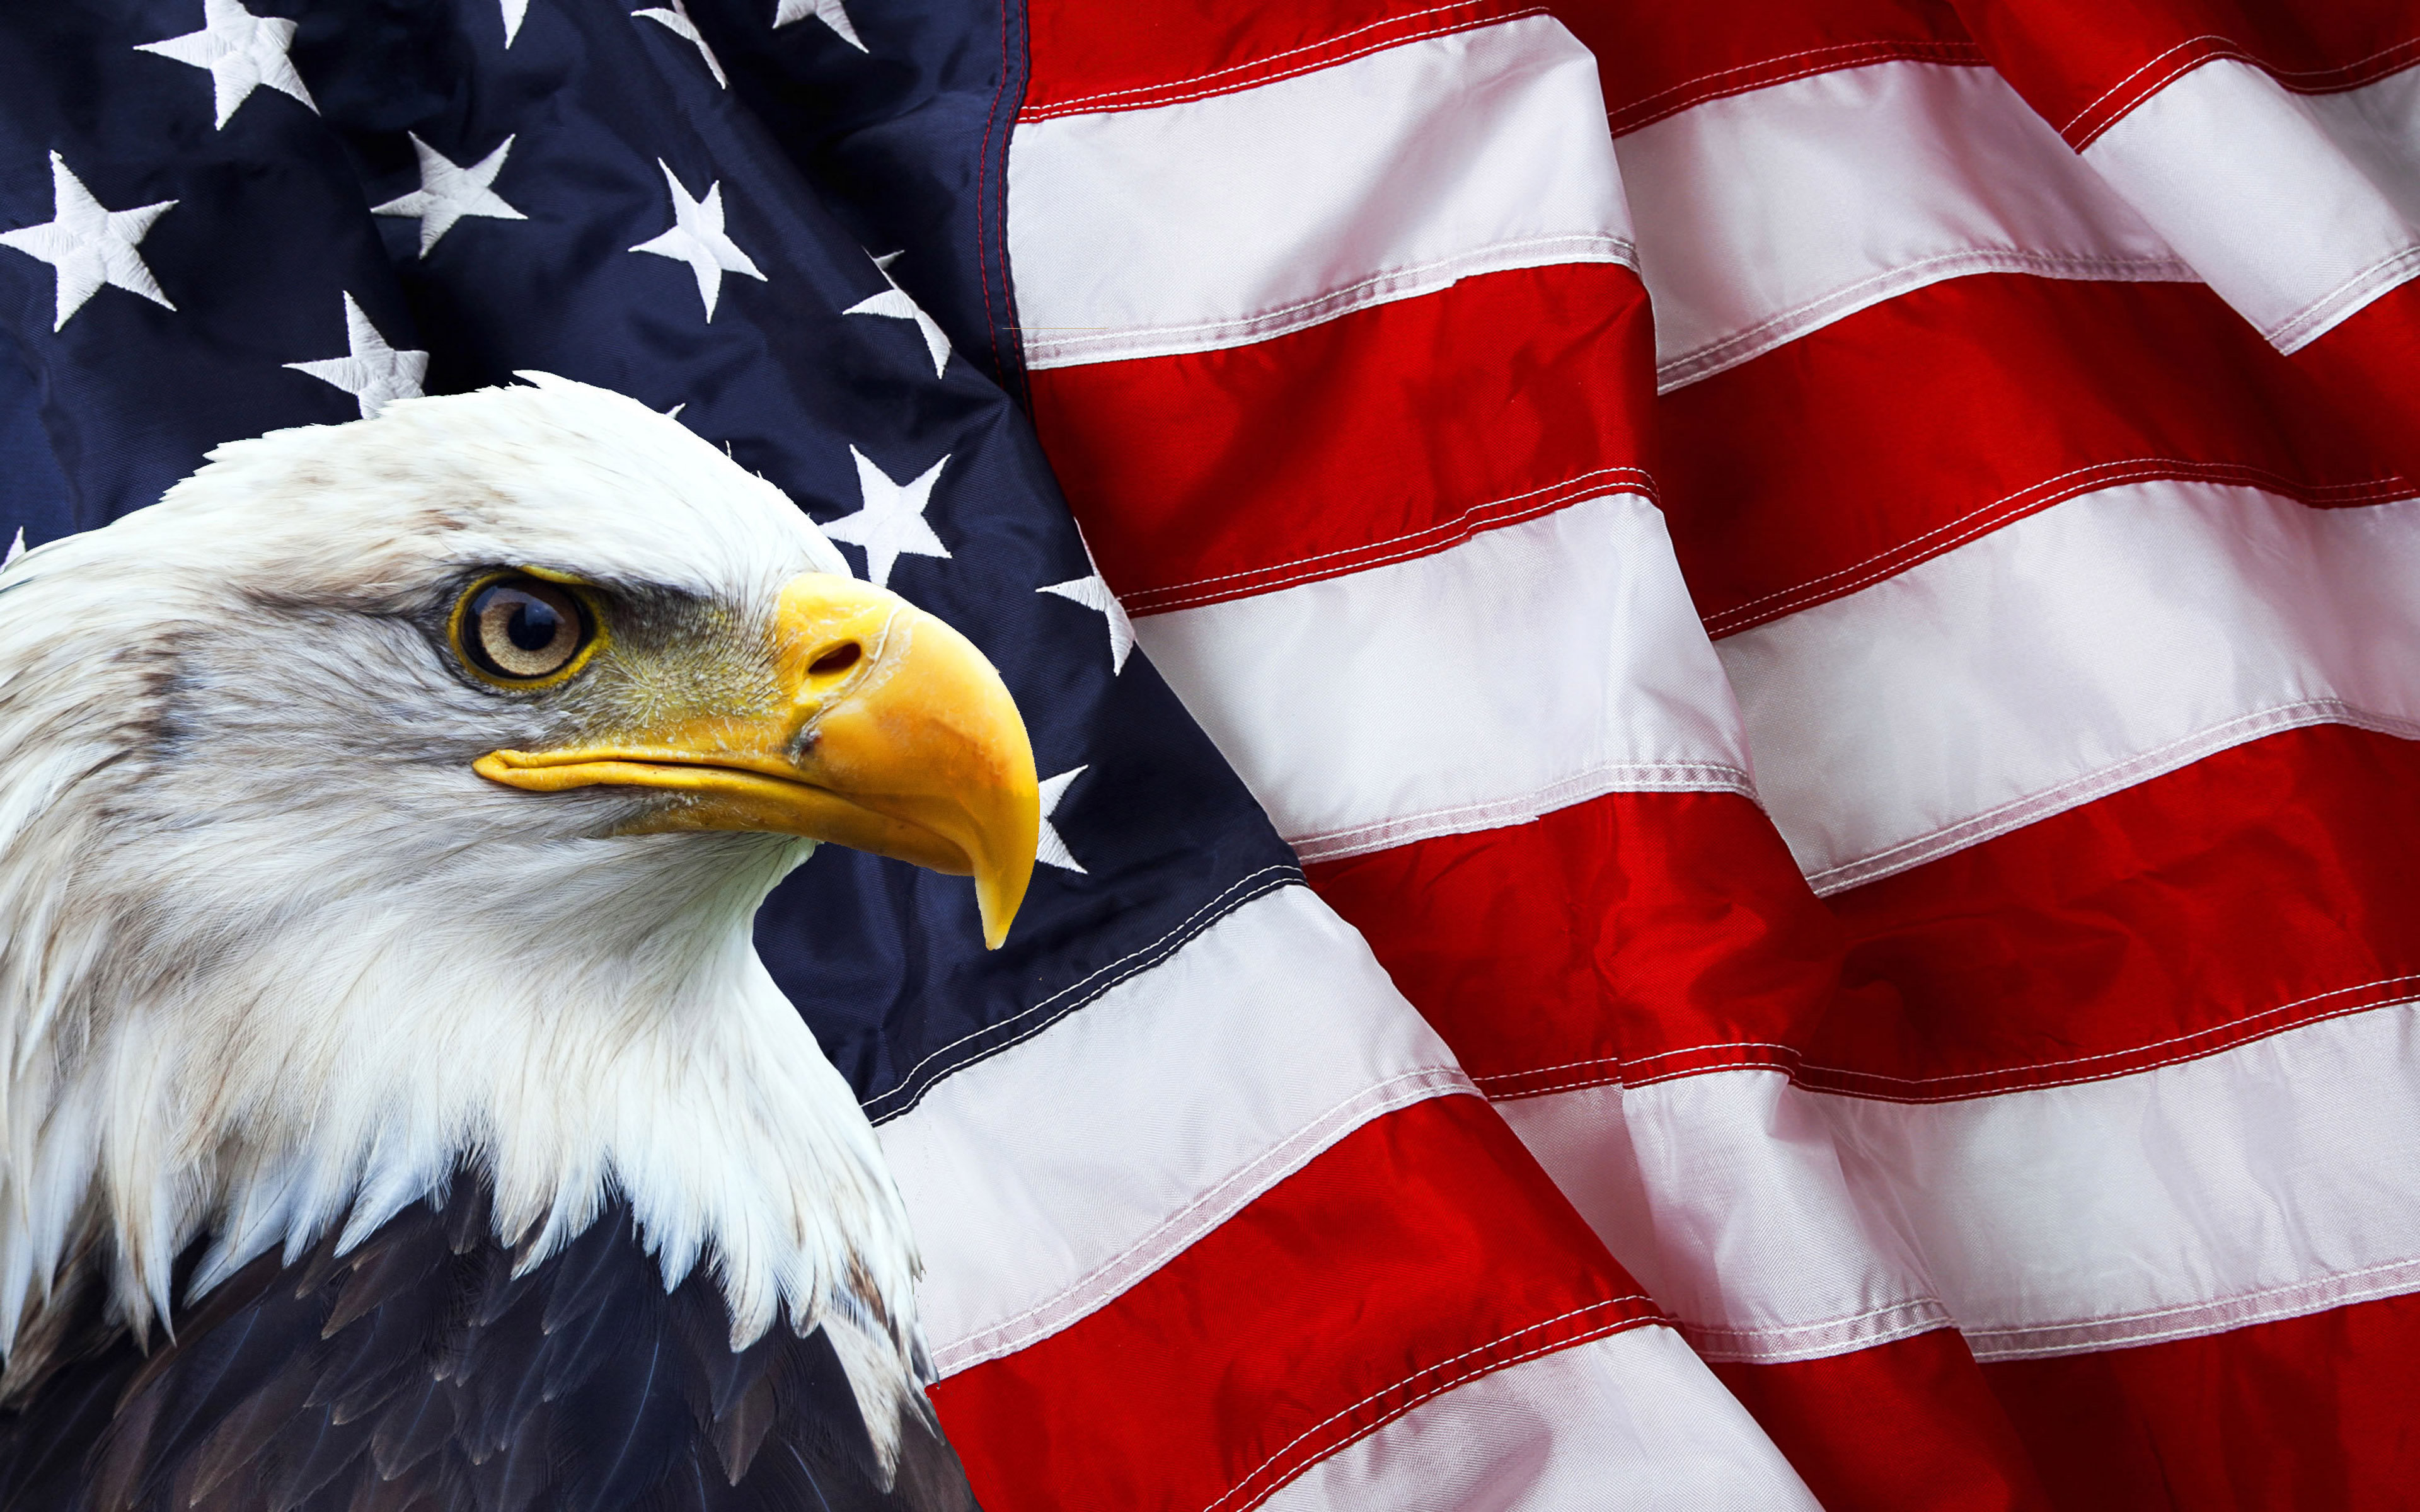 American Flag And Bald Eagle Photo Symbols Of North America 3840x2400